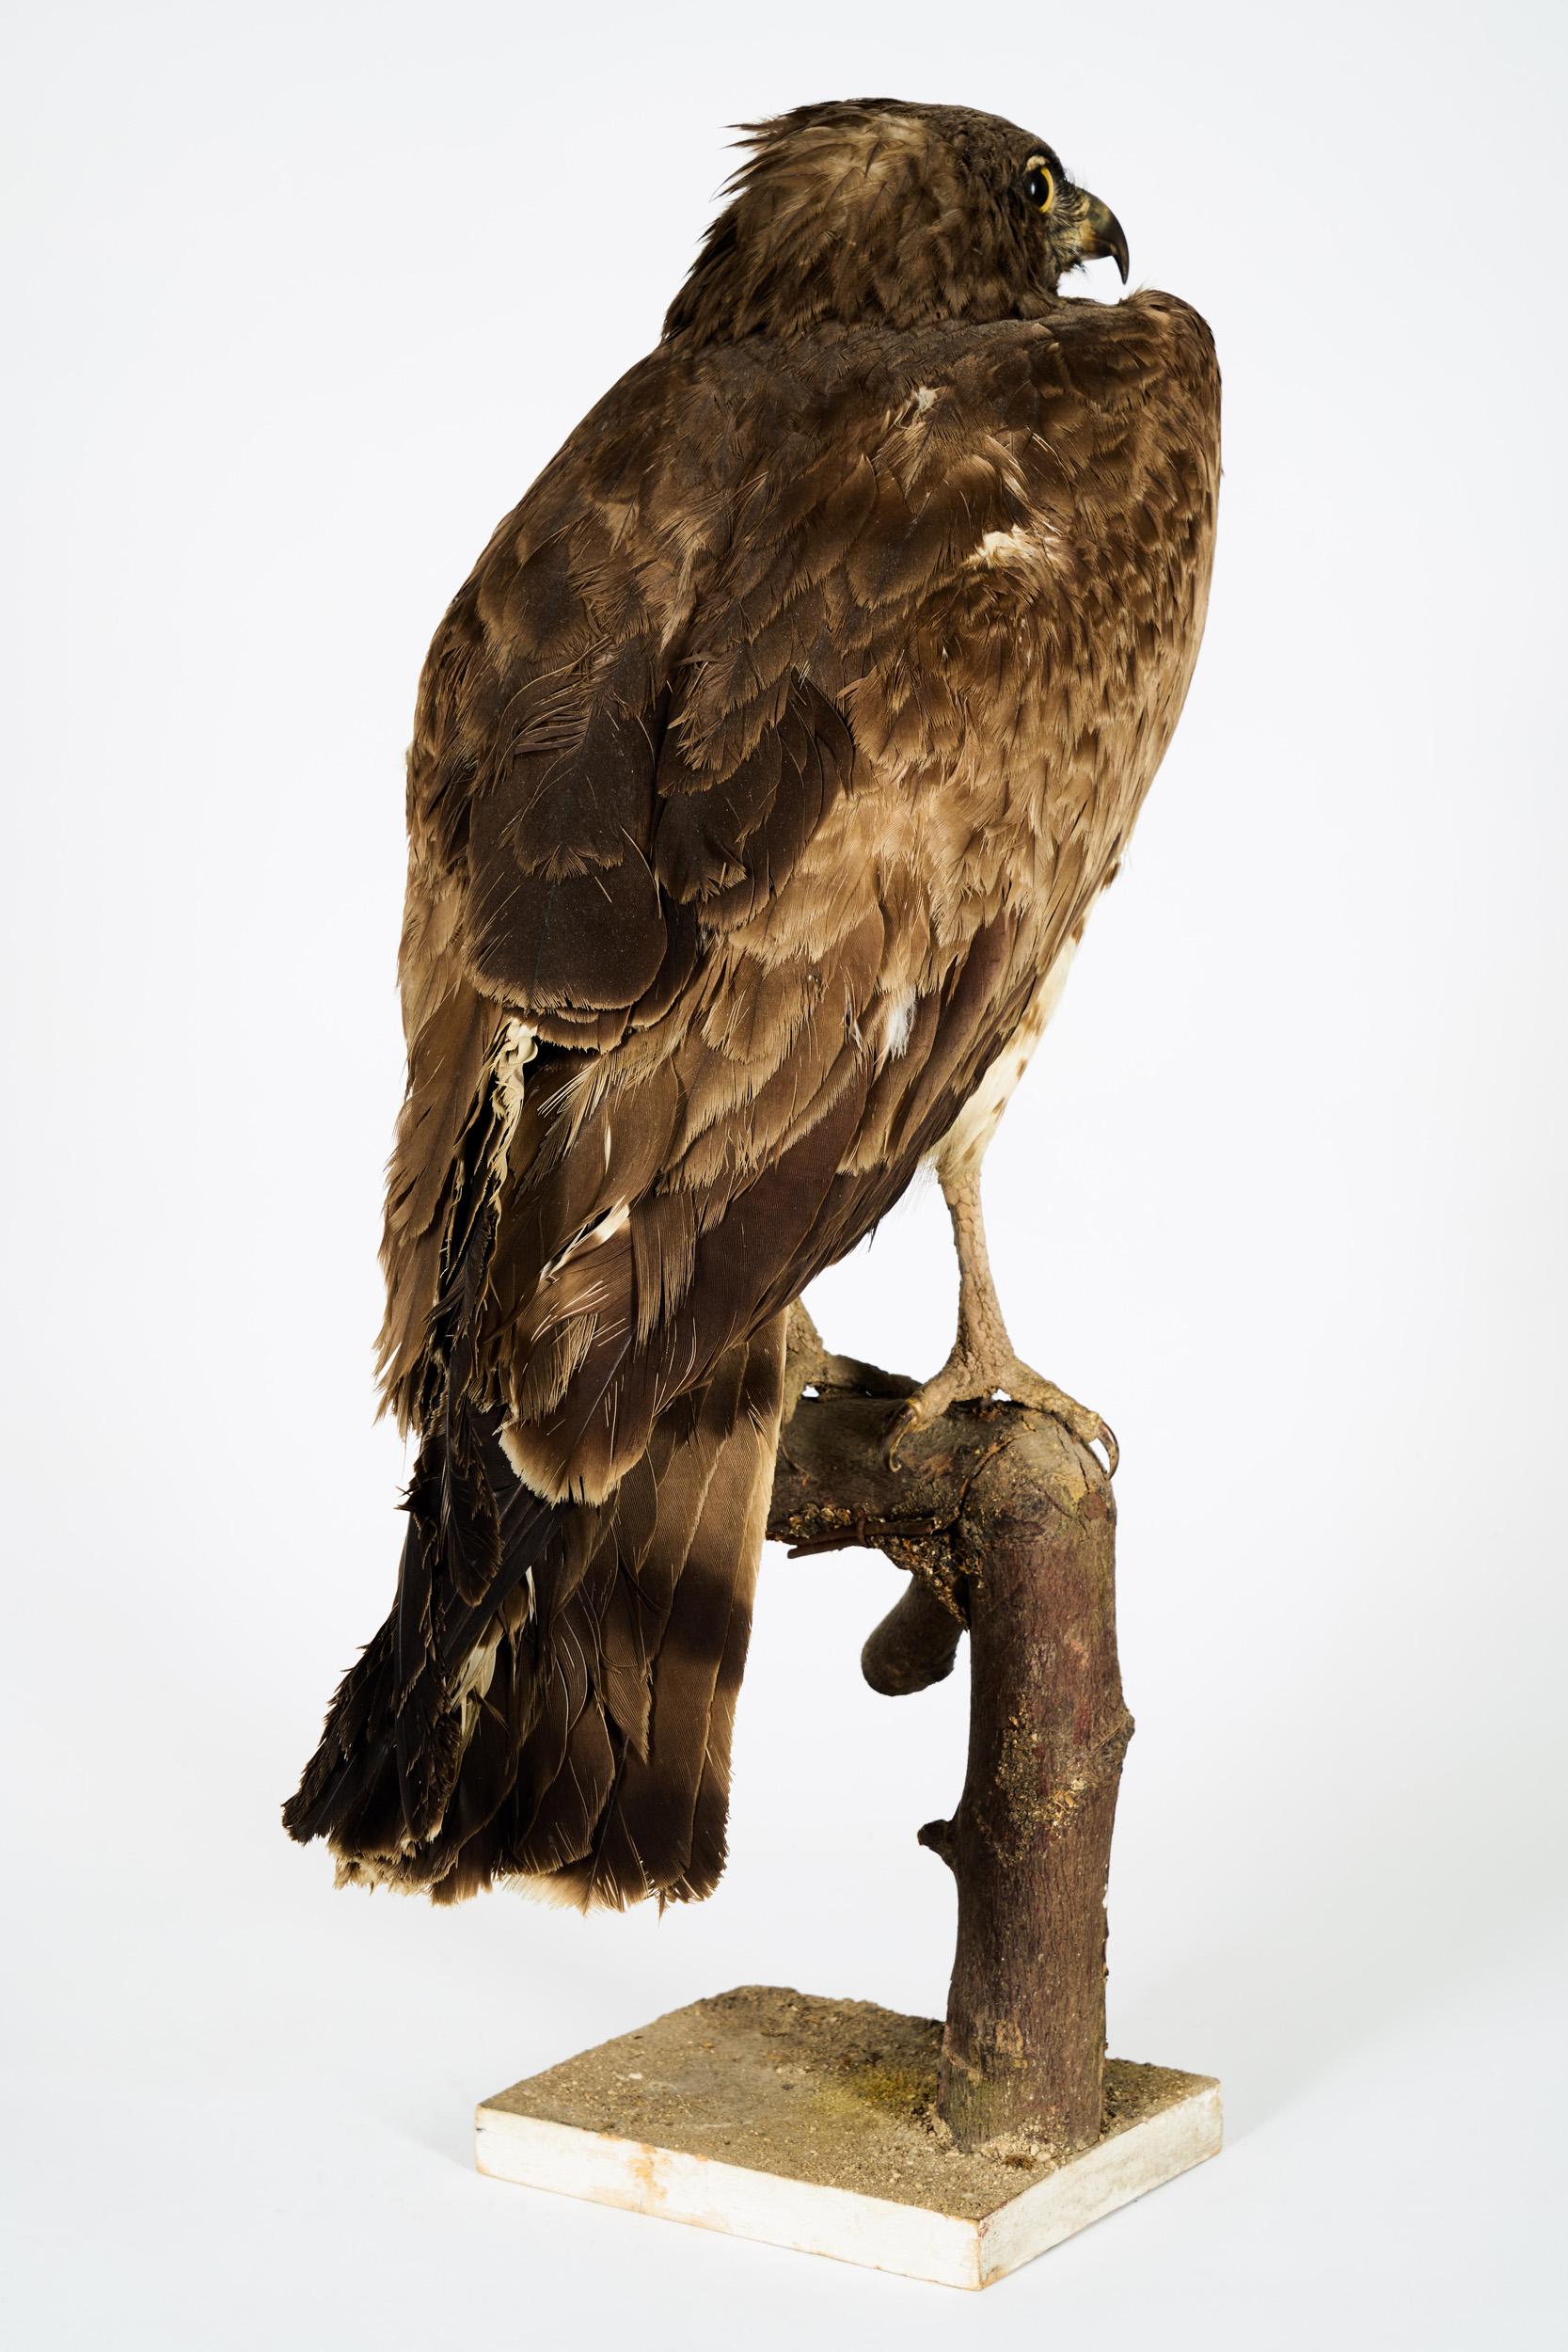 European 1908, Short-Toed Snake Eagle 'Circaetus gallicus' on a Tree Stump For Sale